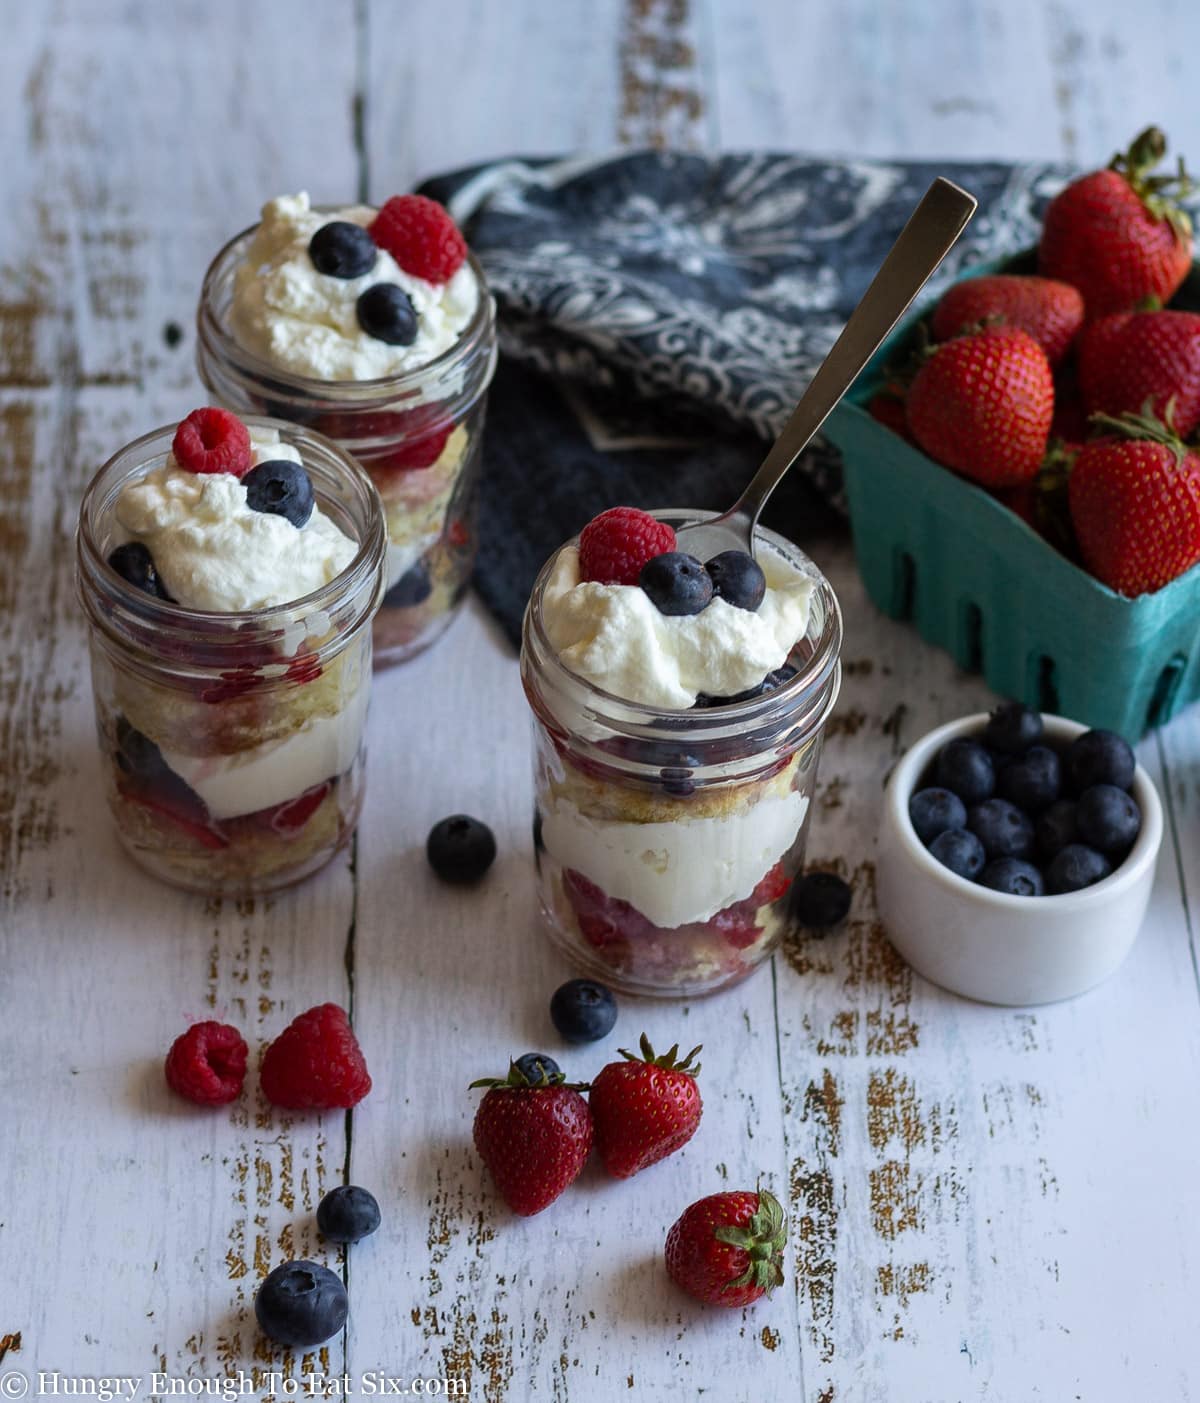 Three mason jars holding layered trifles of fruit and cream